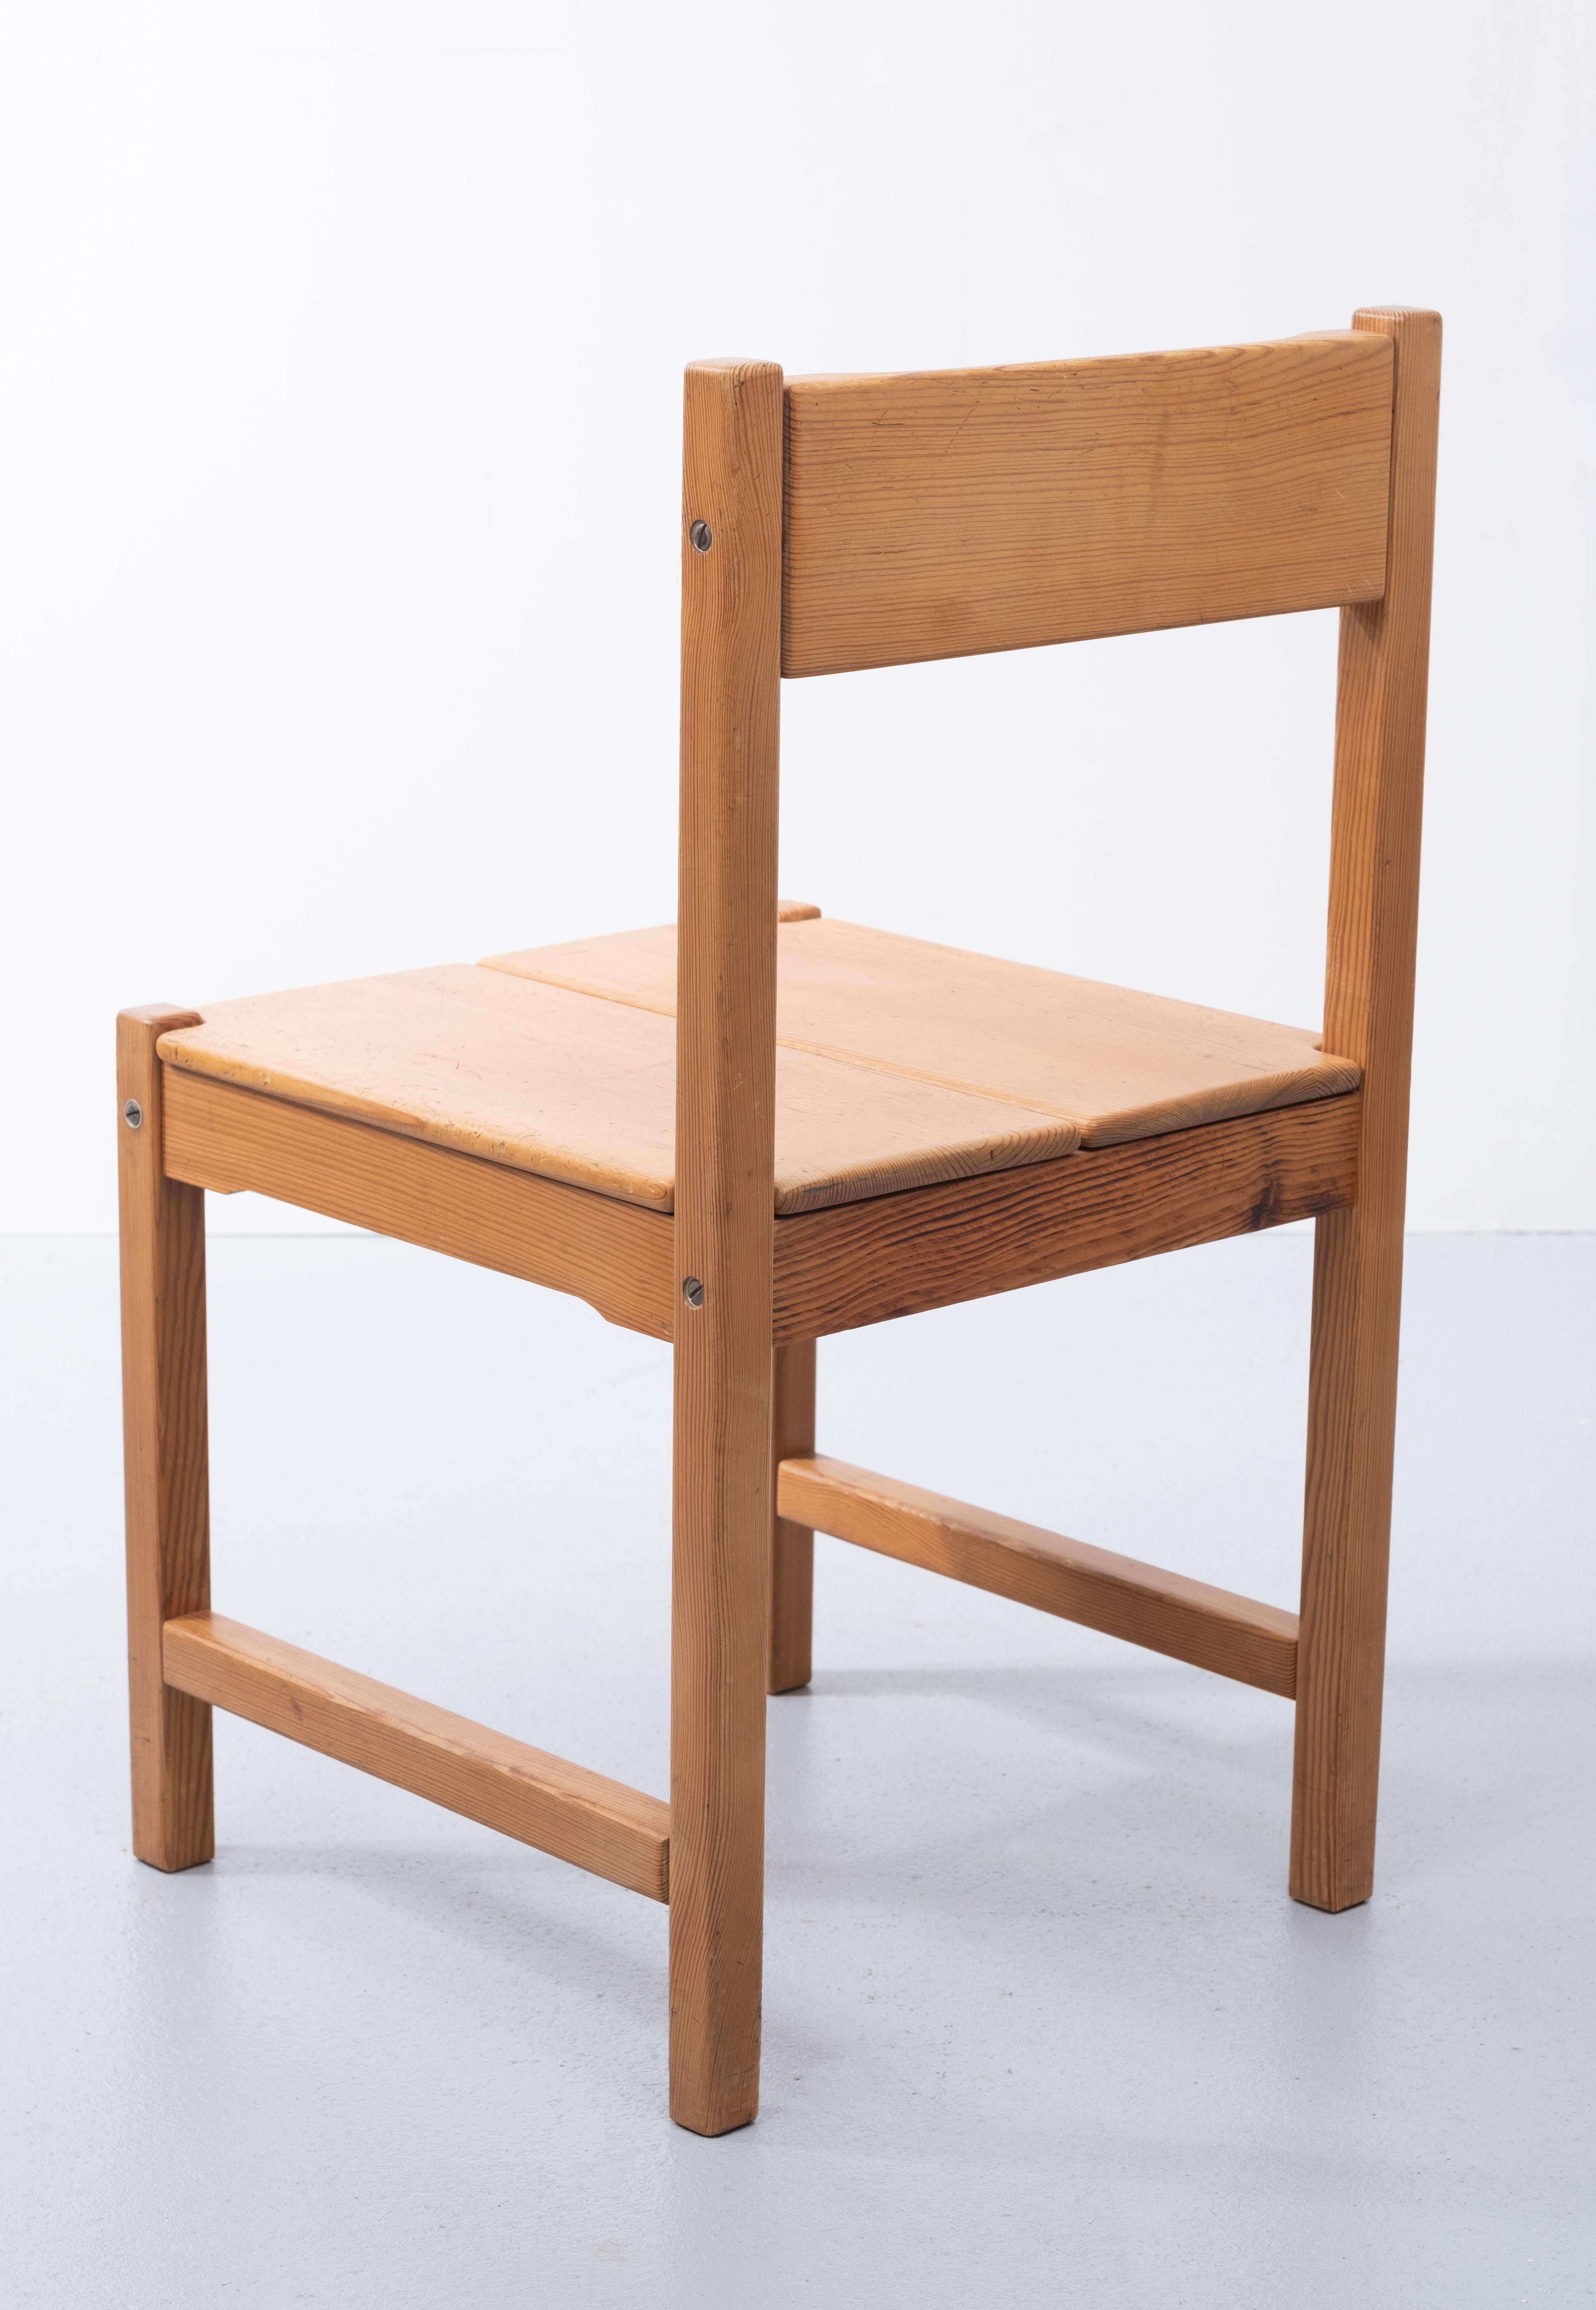 Tapio Wirkkala Pine Dining Chairs, 1960s For Sale 1